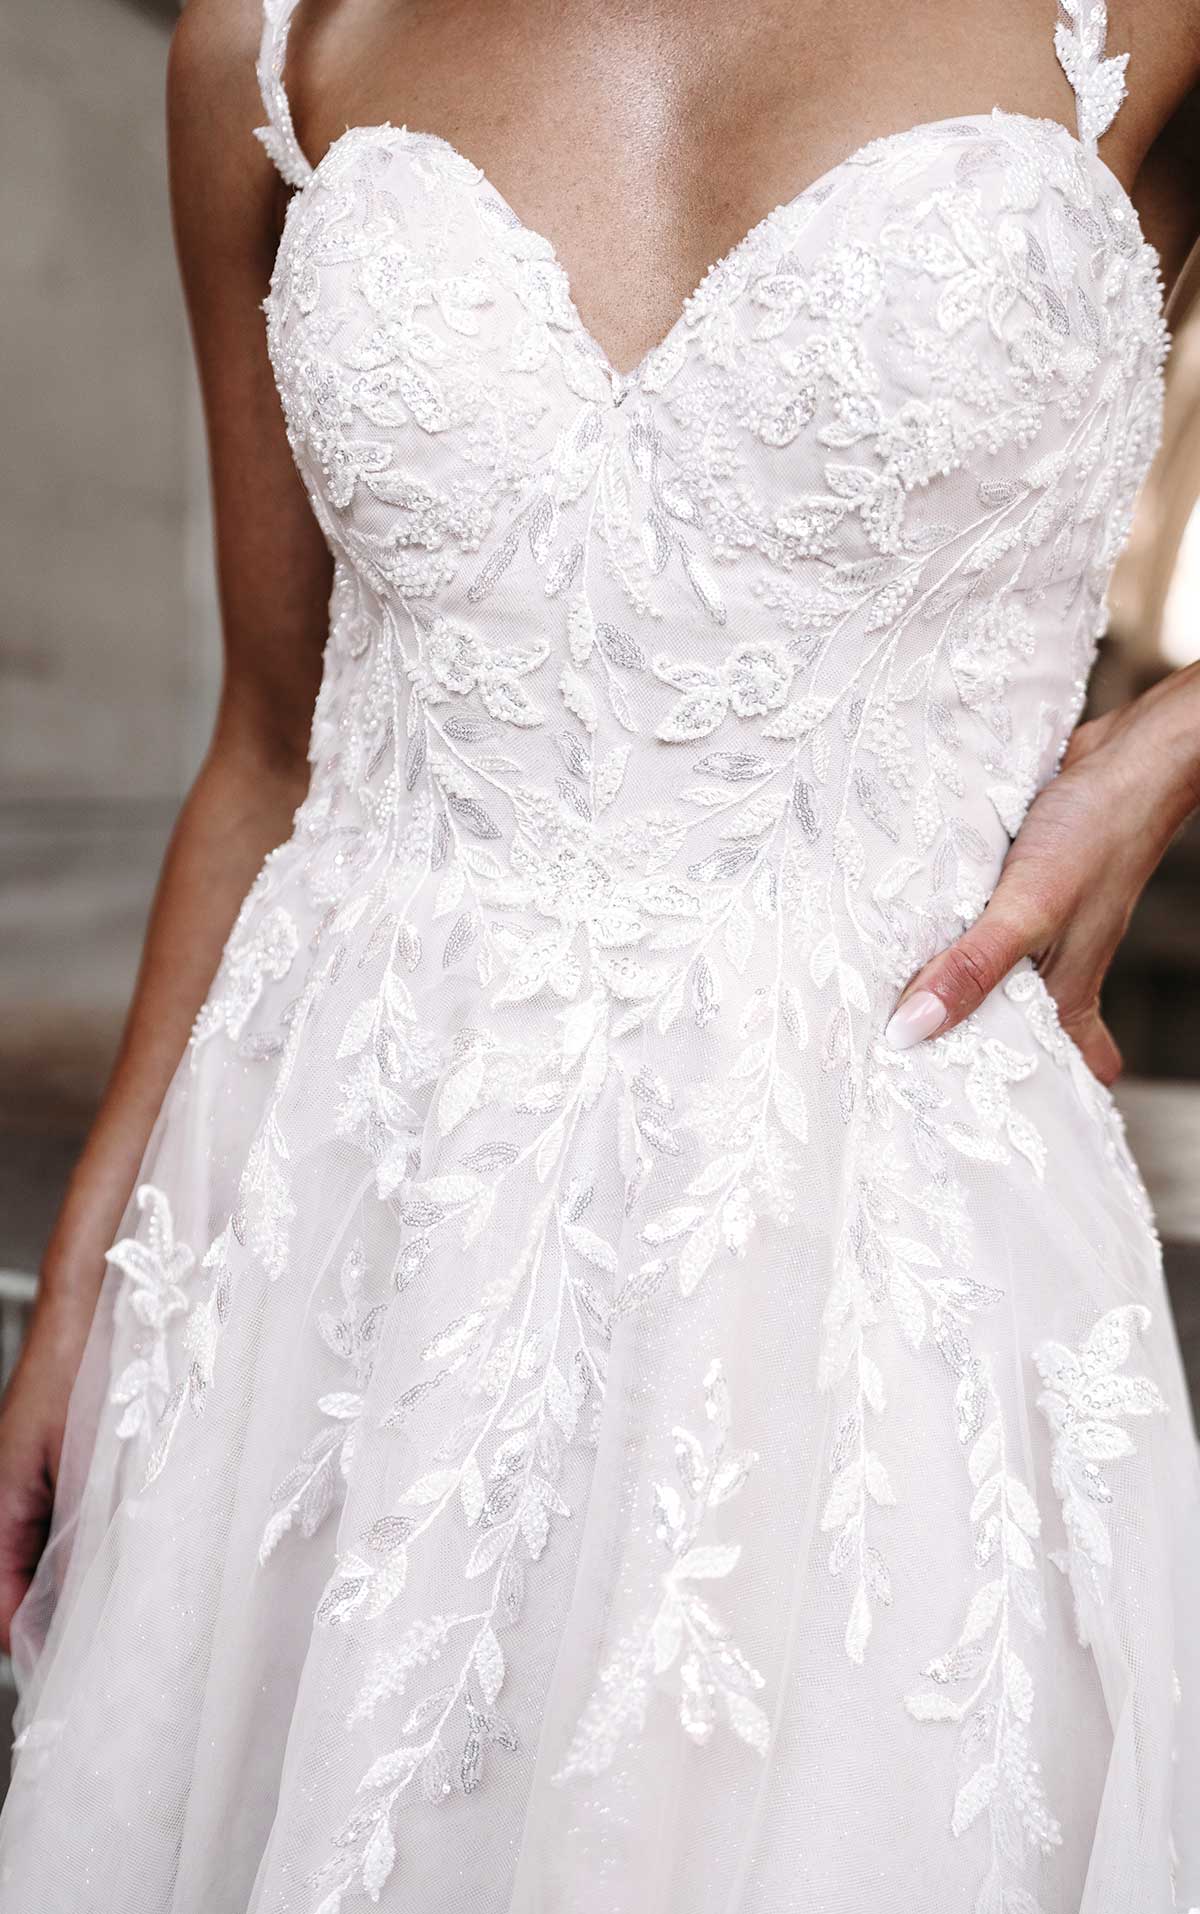 Lace A line wedding dress - off the peg